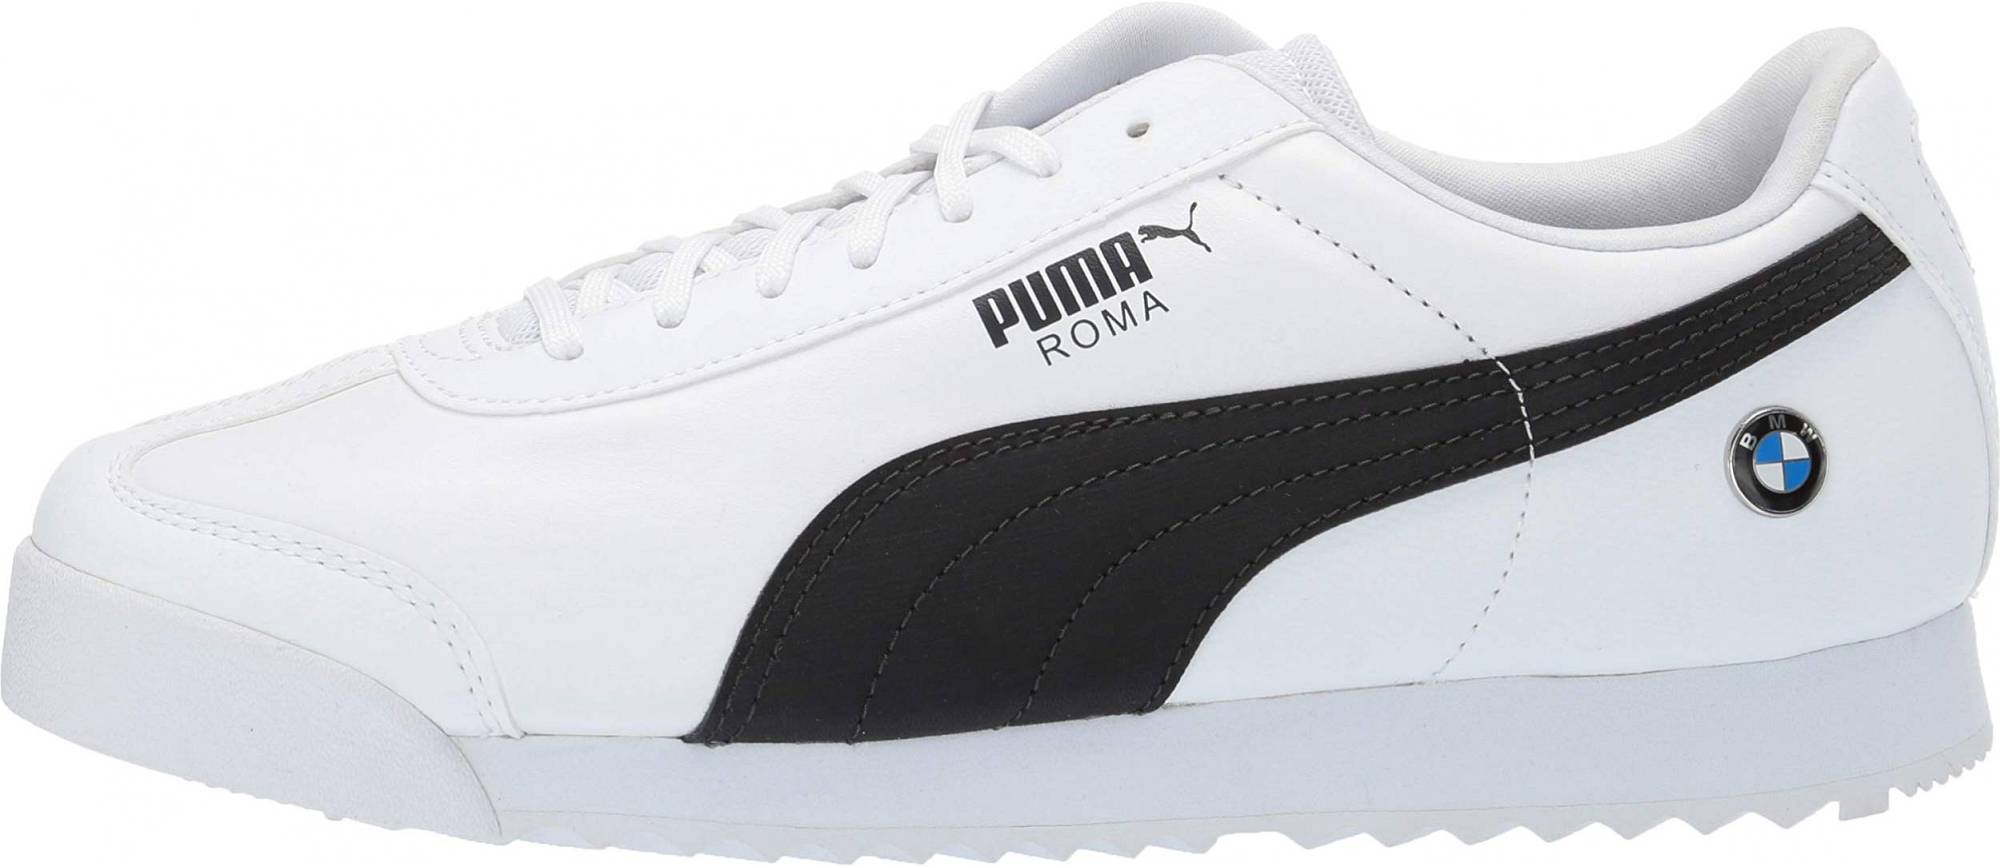 Puma BMW MMS Roma – Shoes Reviews & Reasons To Buy